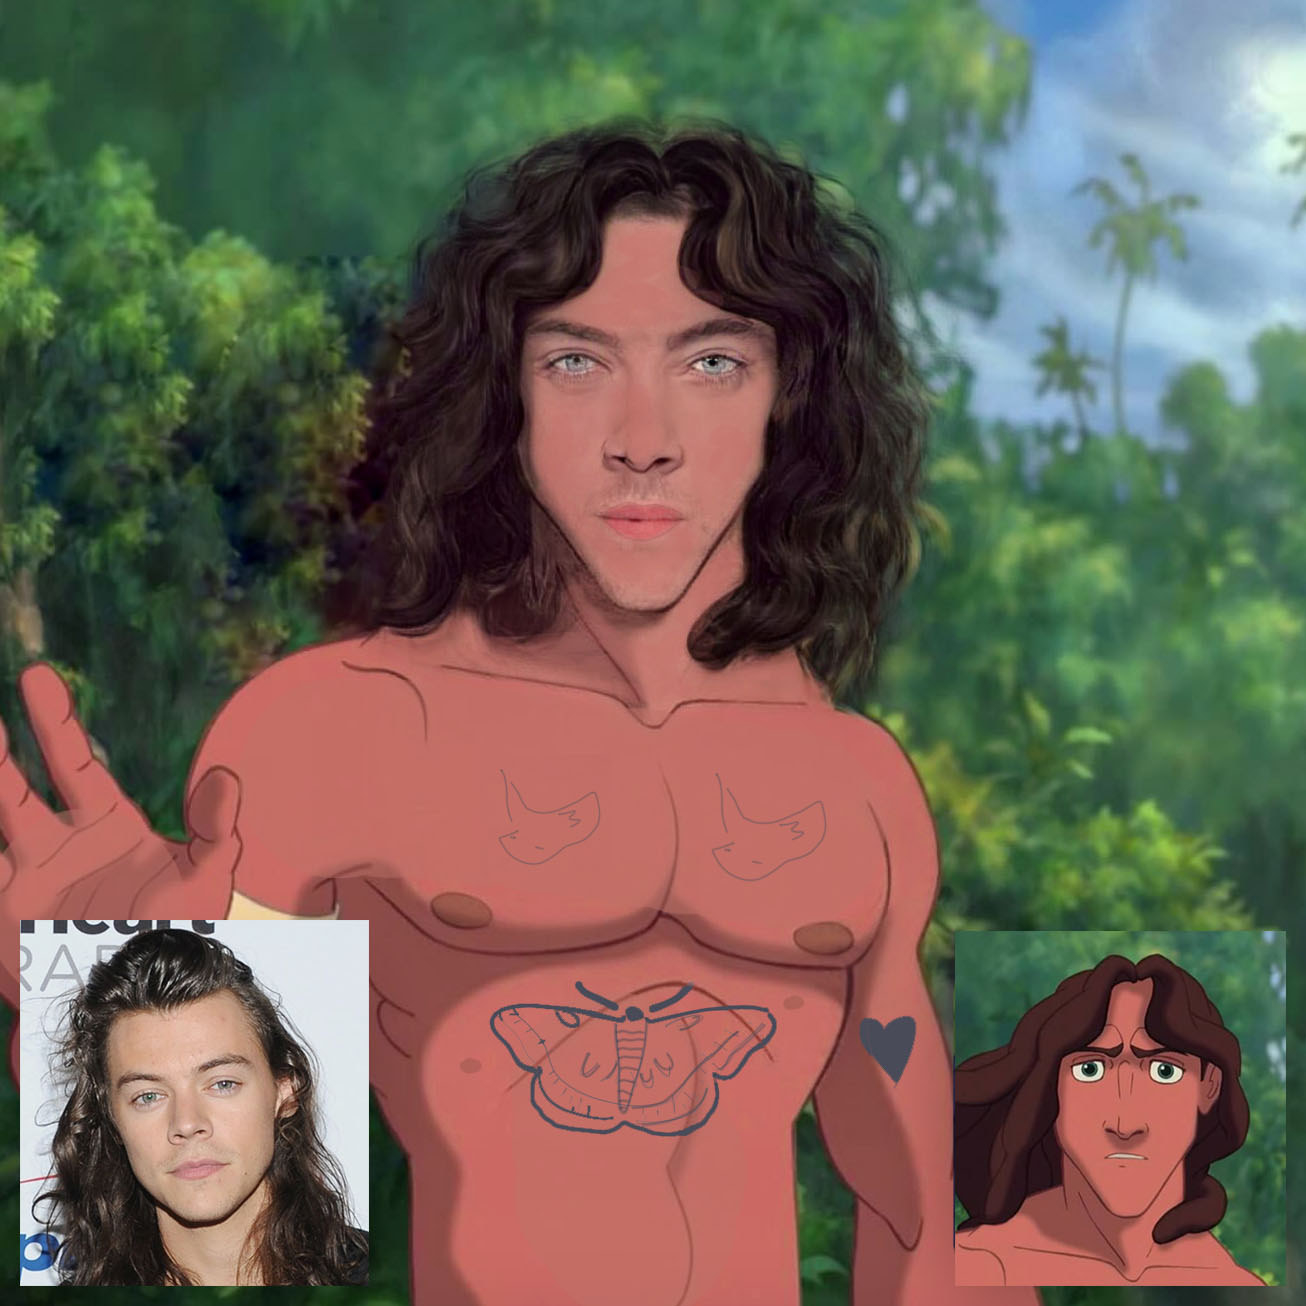 Harry morphed with Tarzan